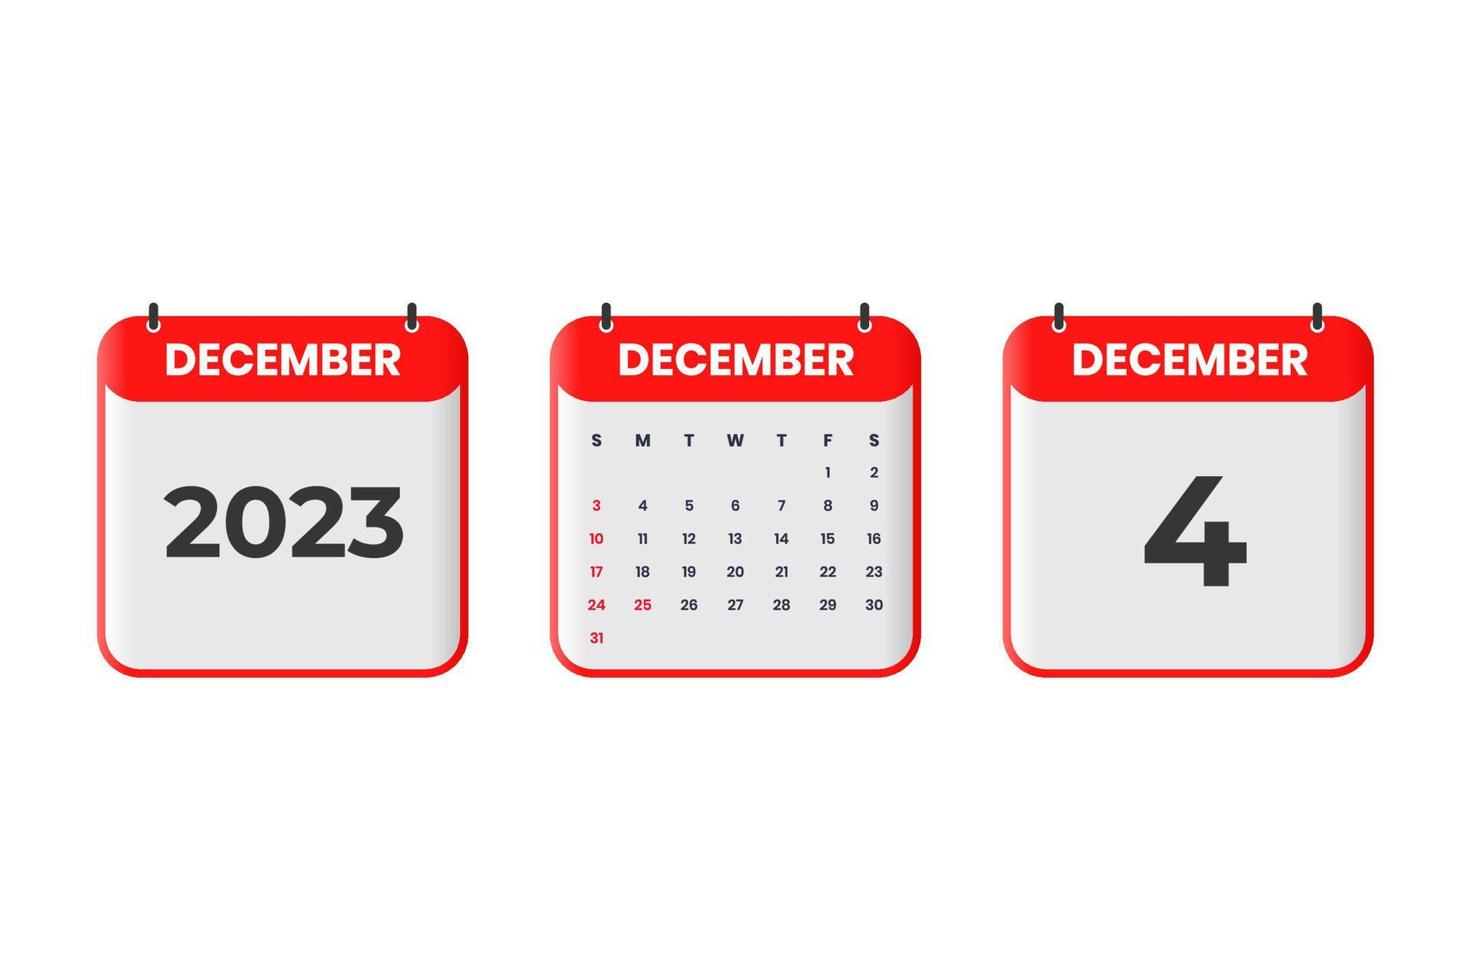 Dezember 2023 Kalenderdesign. 4. Dezember 2023 Kalendersymbol für Zeitplan, Termin, wichtiges Datumskonzept vektor